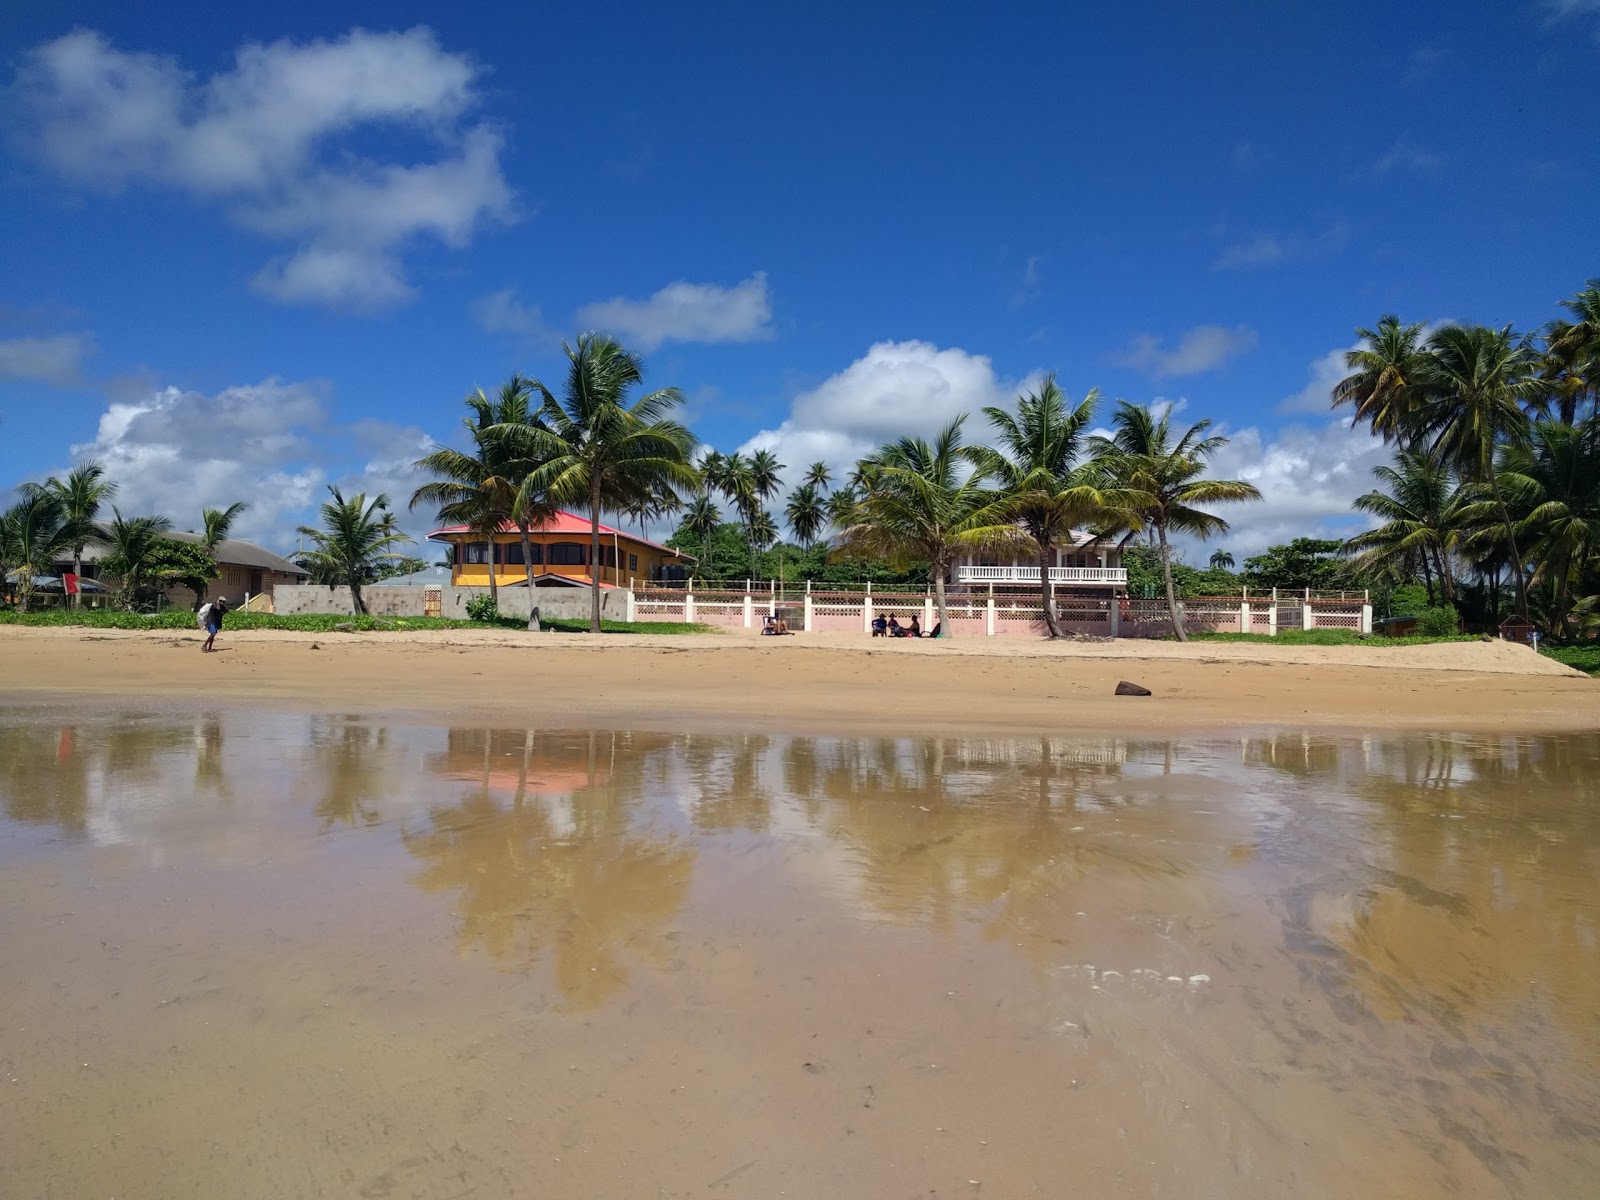 Foto de Mayaro beach - lugar popular entre os apreciadores de relaxamento